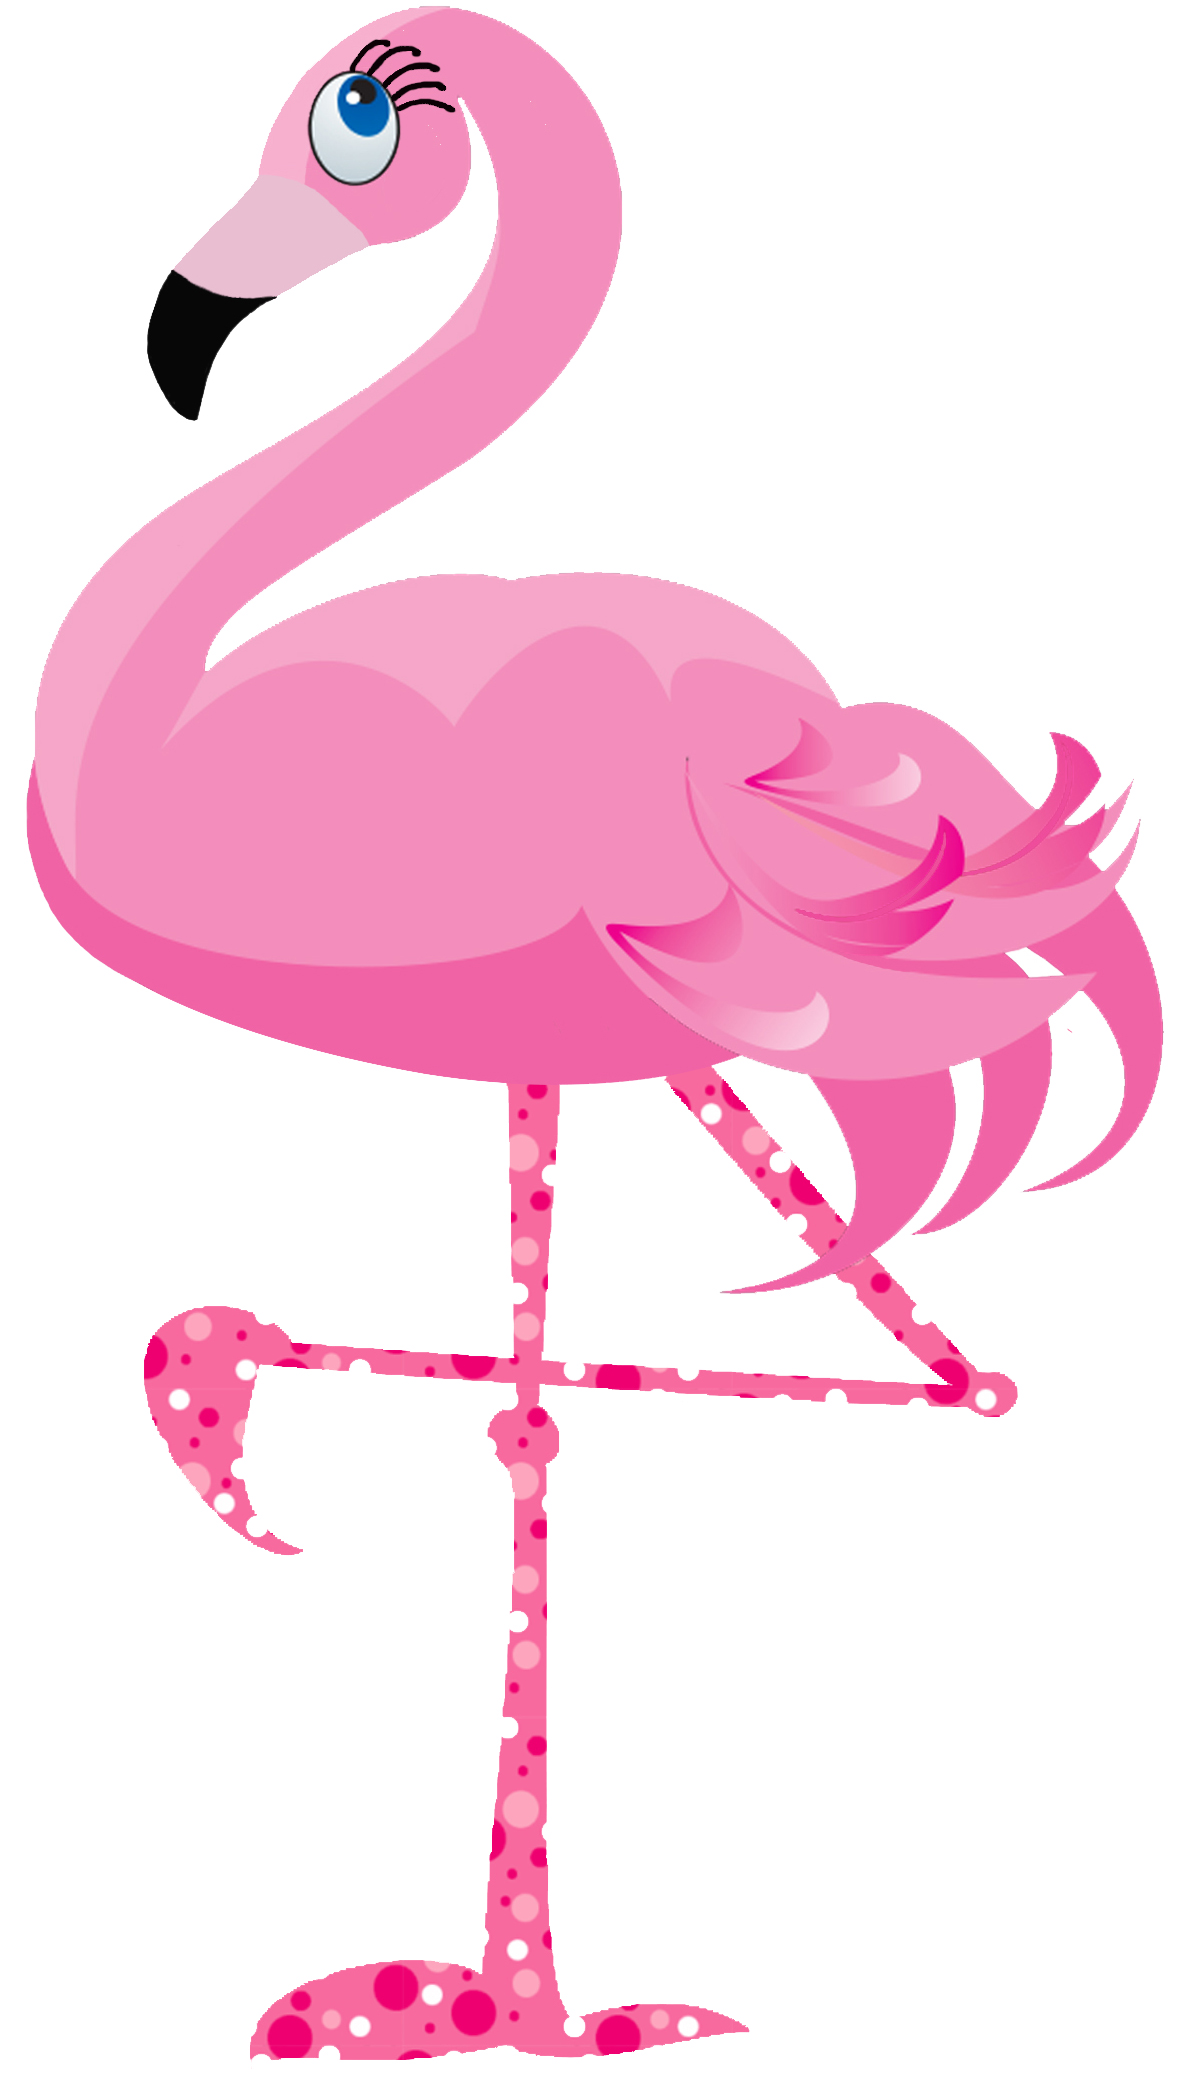 New Flamingo Mascot! | Flamingos 2 Go